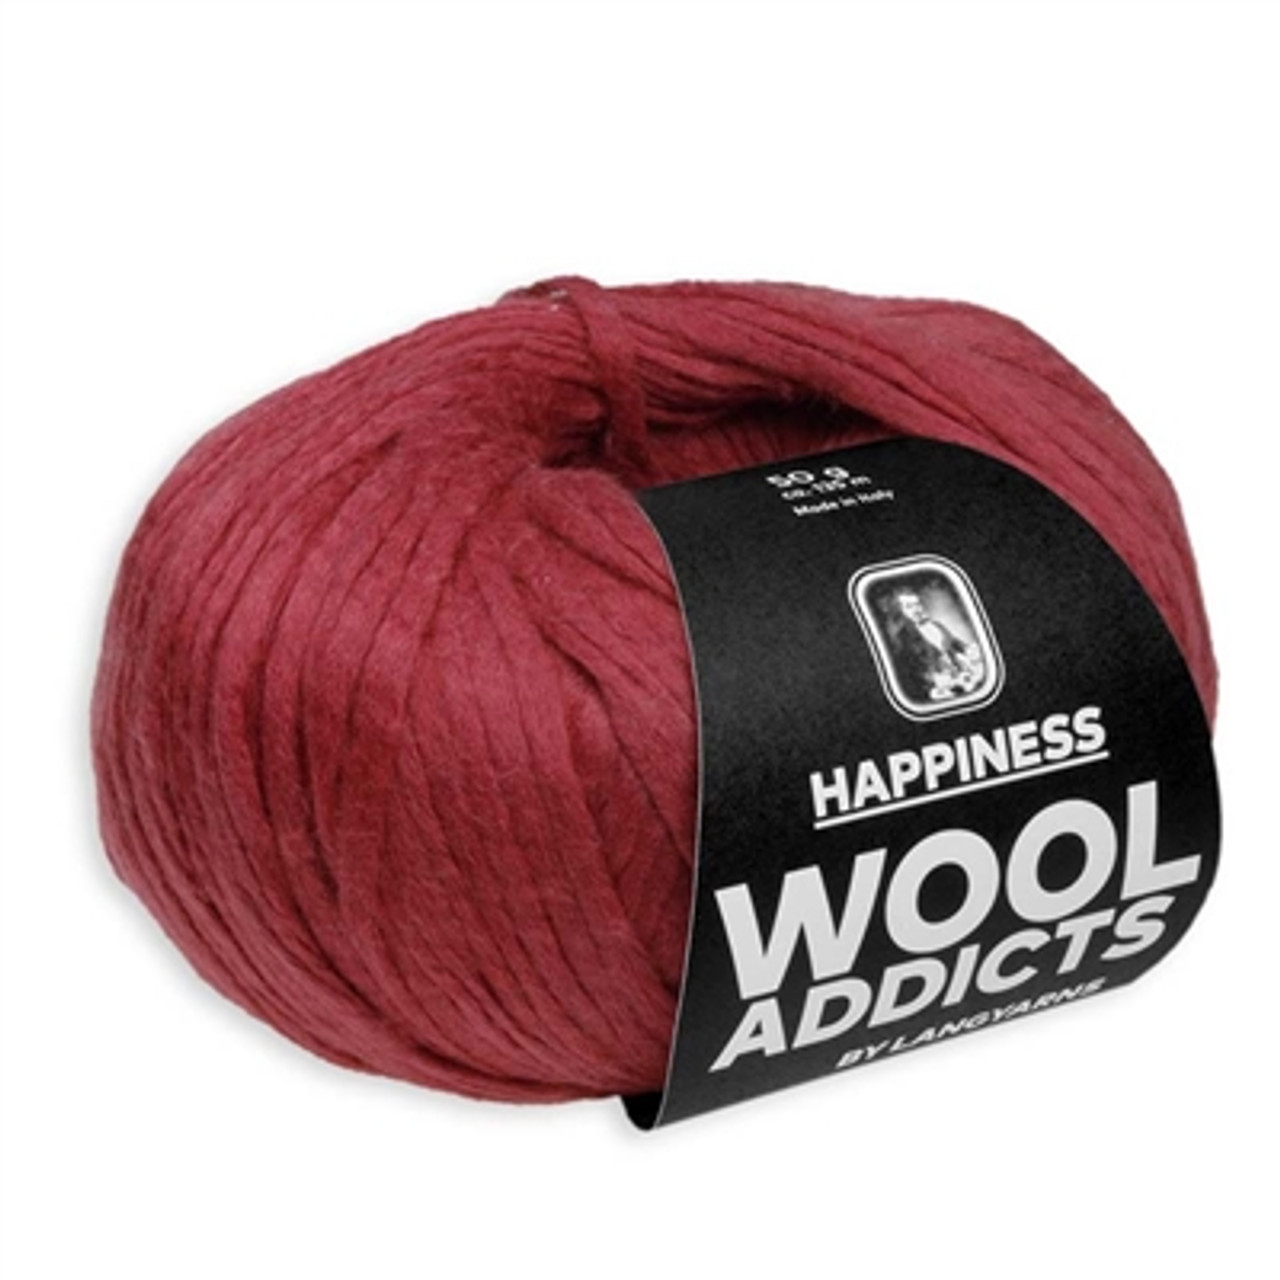 WoolAddicts Happiness Soft Cotton Blend Yarn